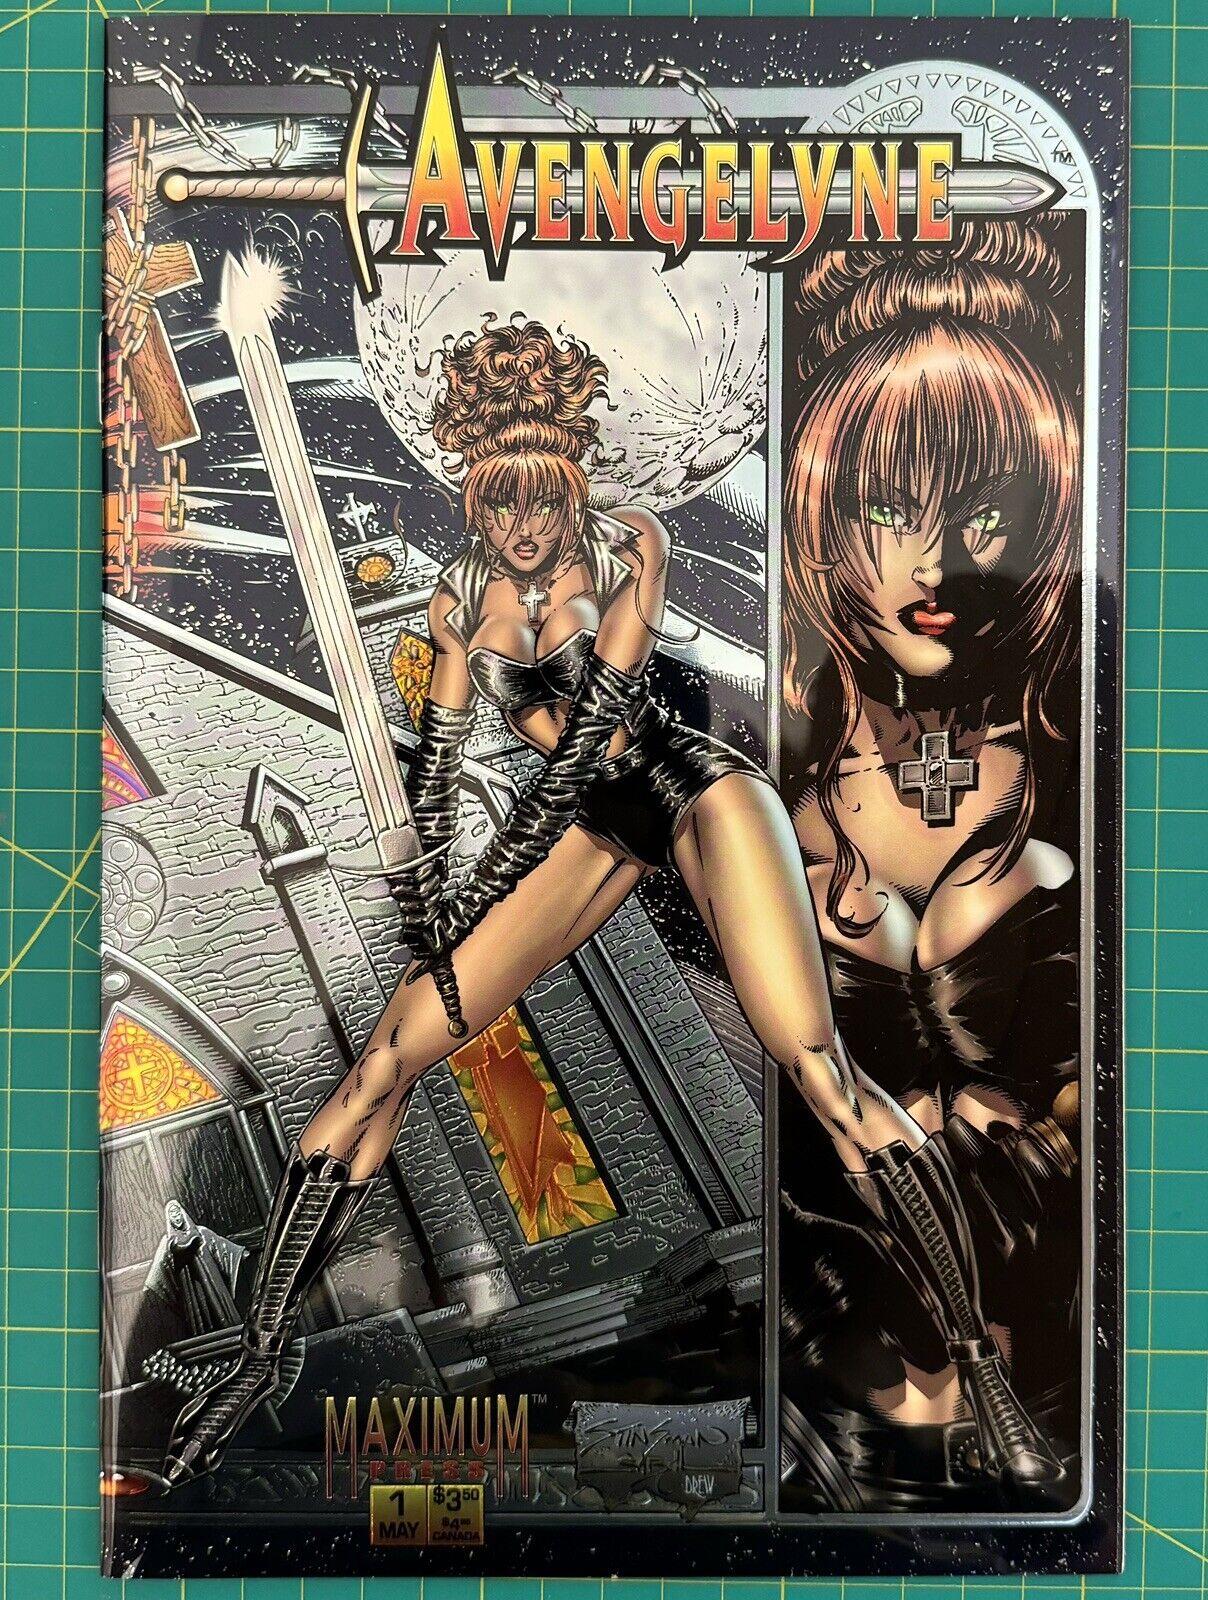 Avengelyne 1 2 3 Complete Mini-Series (Maximum Press 1995) 1st app Liefeld +card